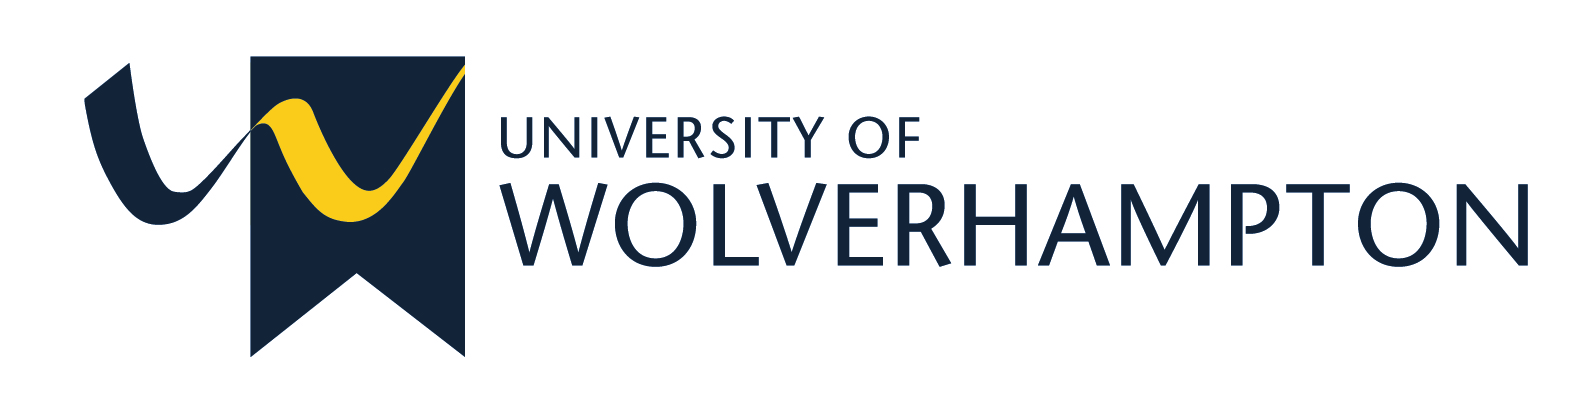 Wolverhampton Logo.jpg